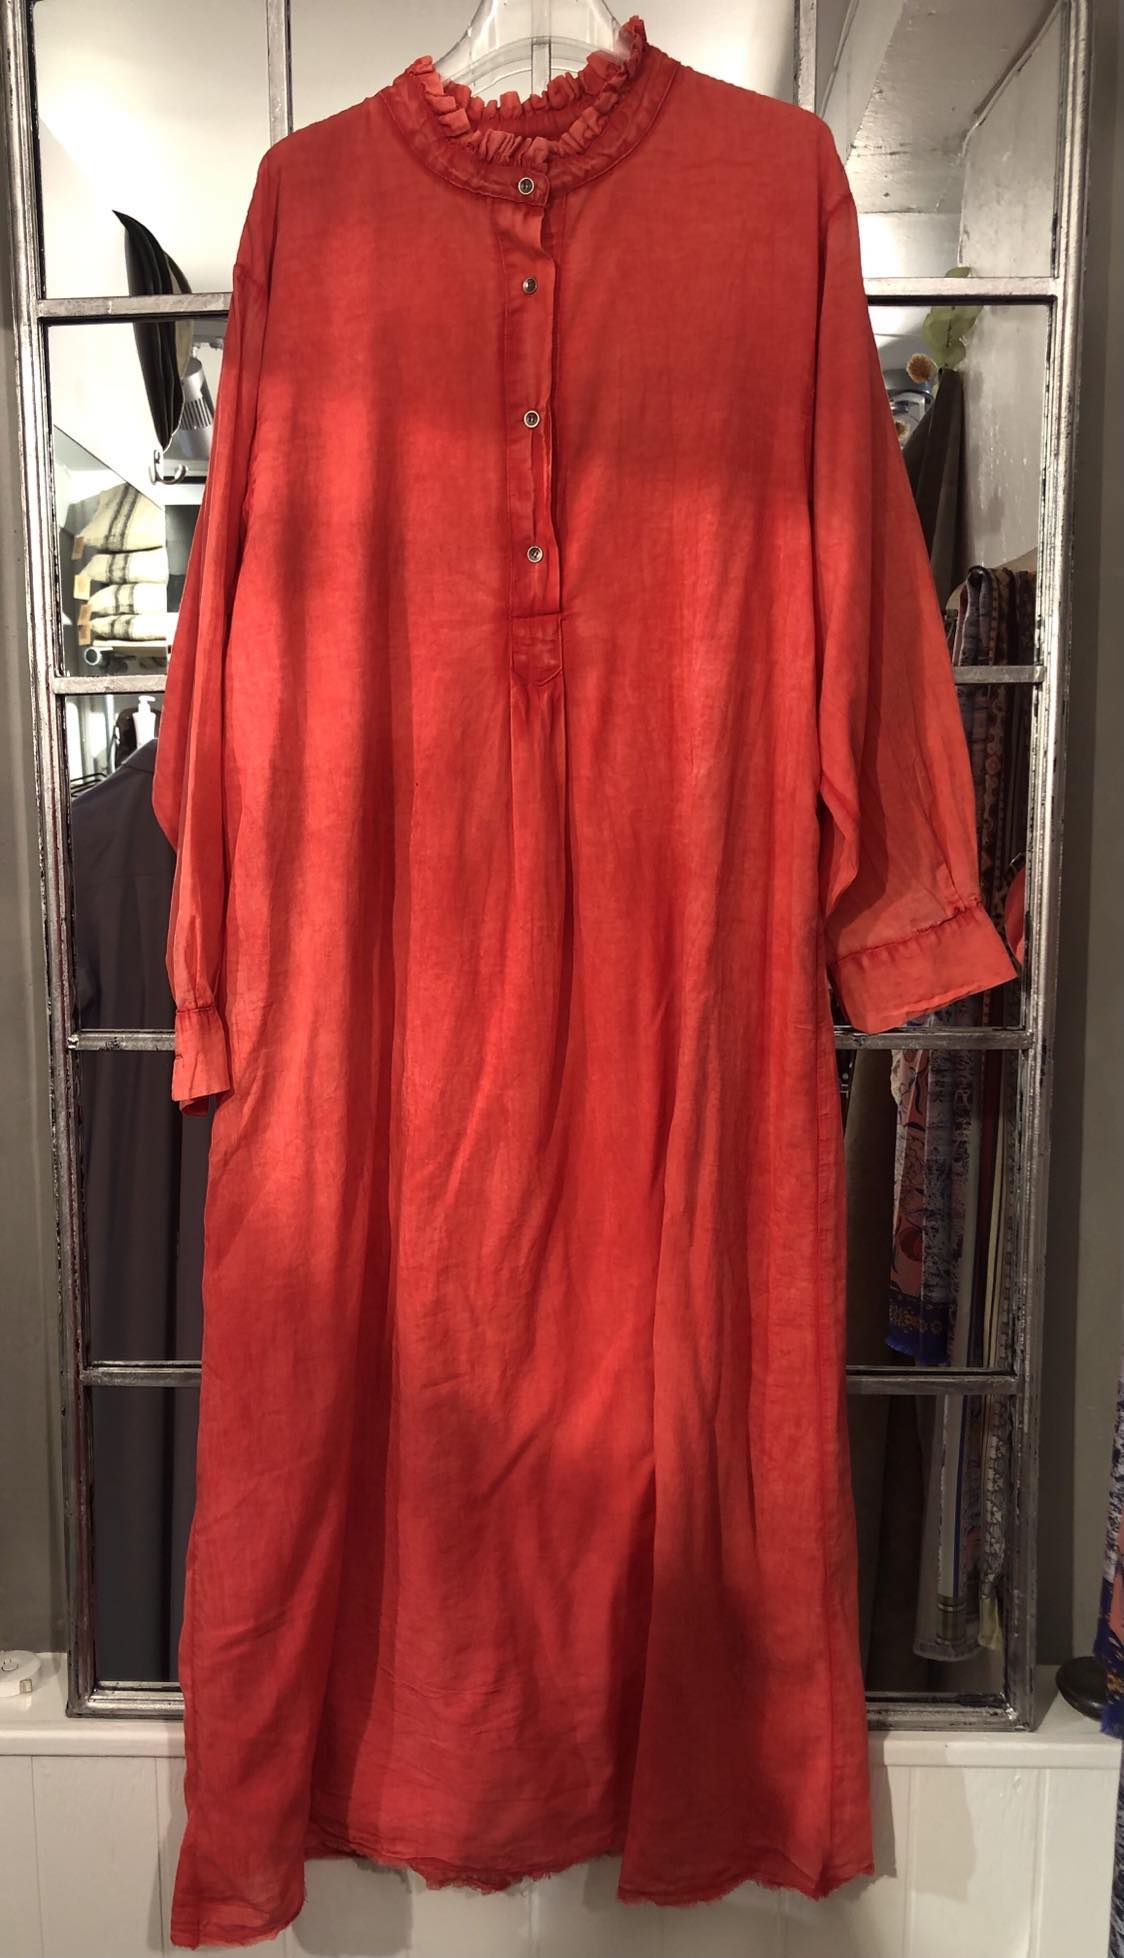 OLINE DRESS - RED 4126